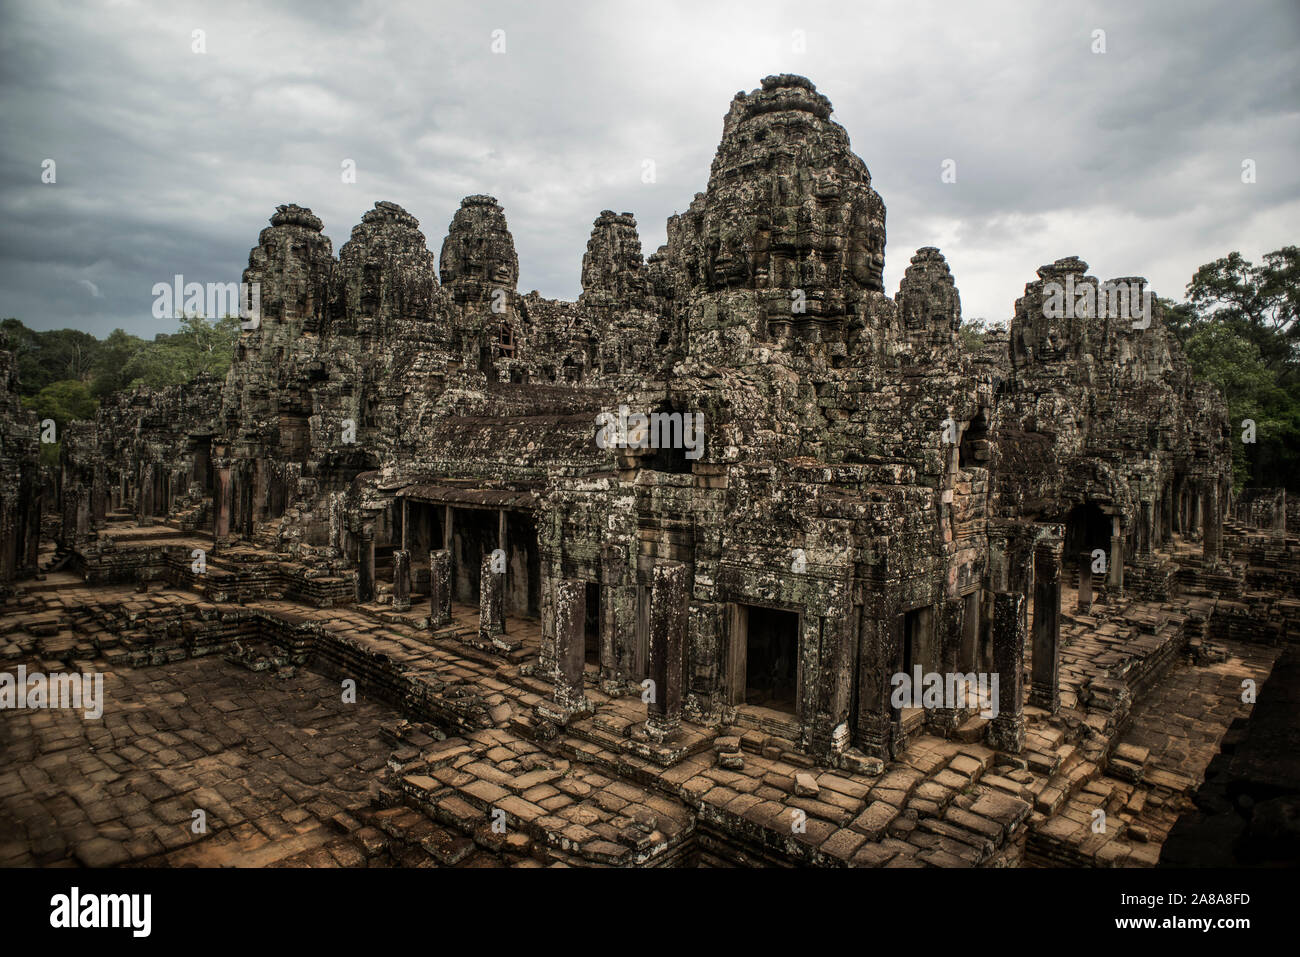 General View Of Bayon At The Angkor Thom Temple In Angkor Wat Siem Reap Cambodia Stock Photo Alamy